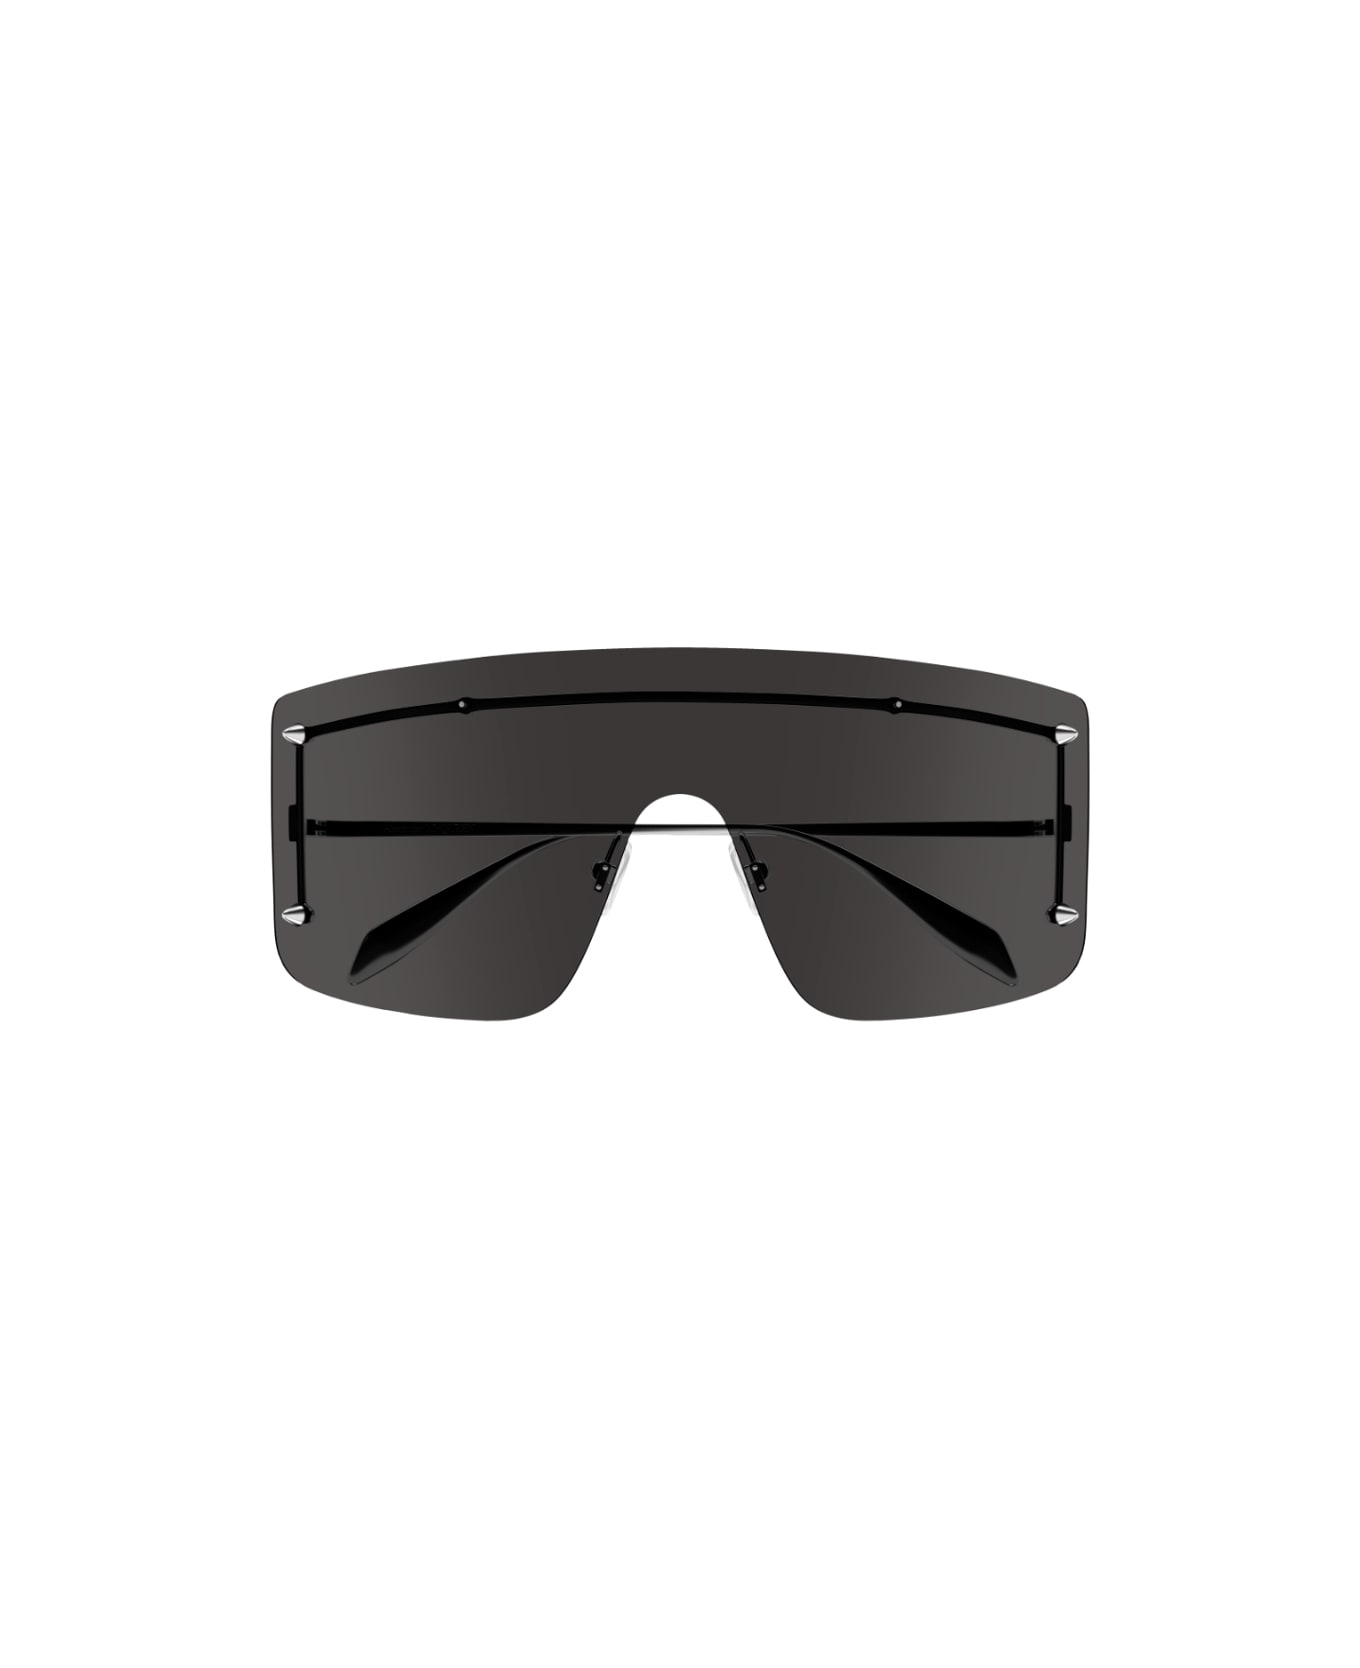 Alexander McQueen Eyewear AM0412s 001 Sunglasses - Nero